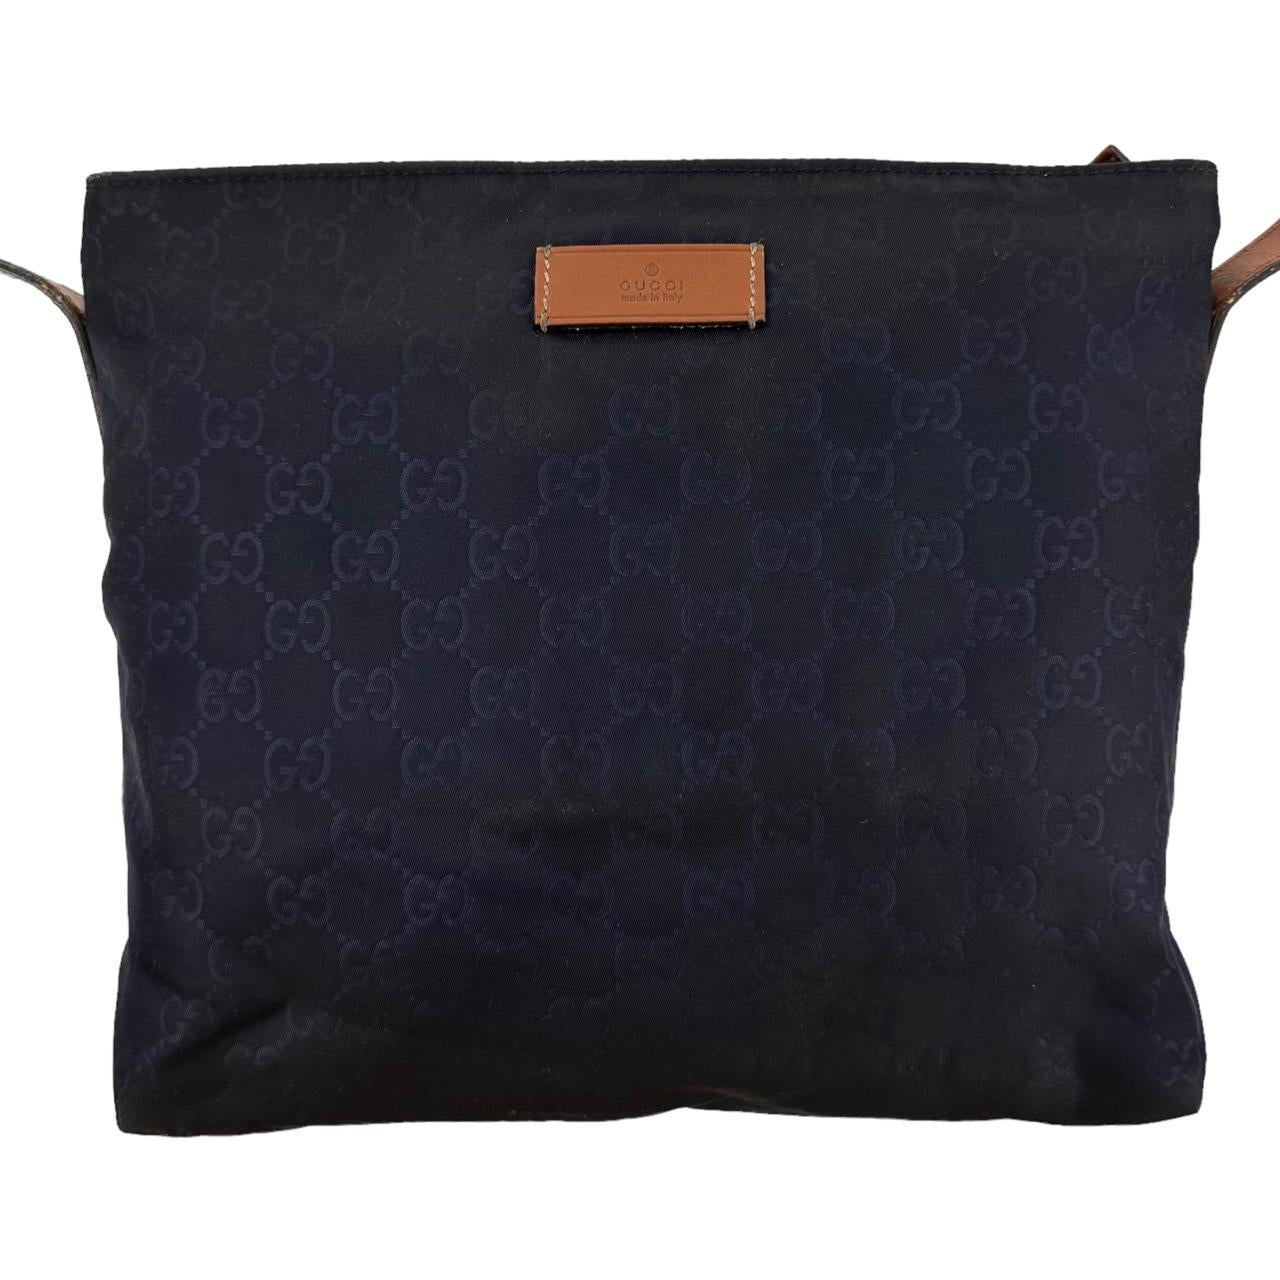 Vintage Gucci Crossbody Bag -  UK